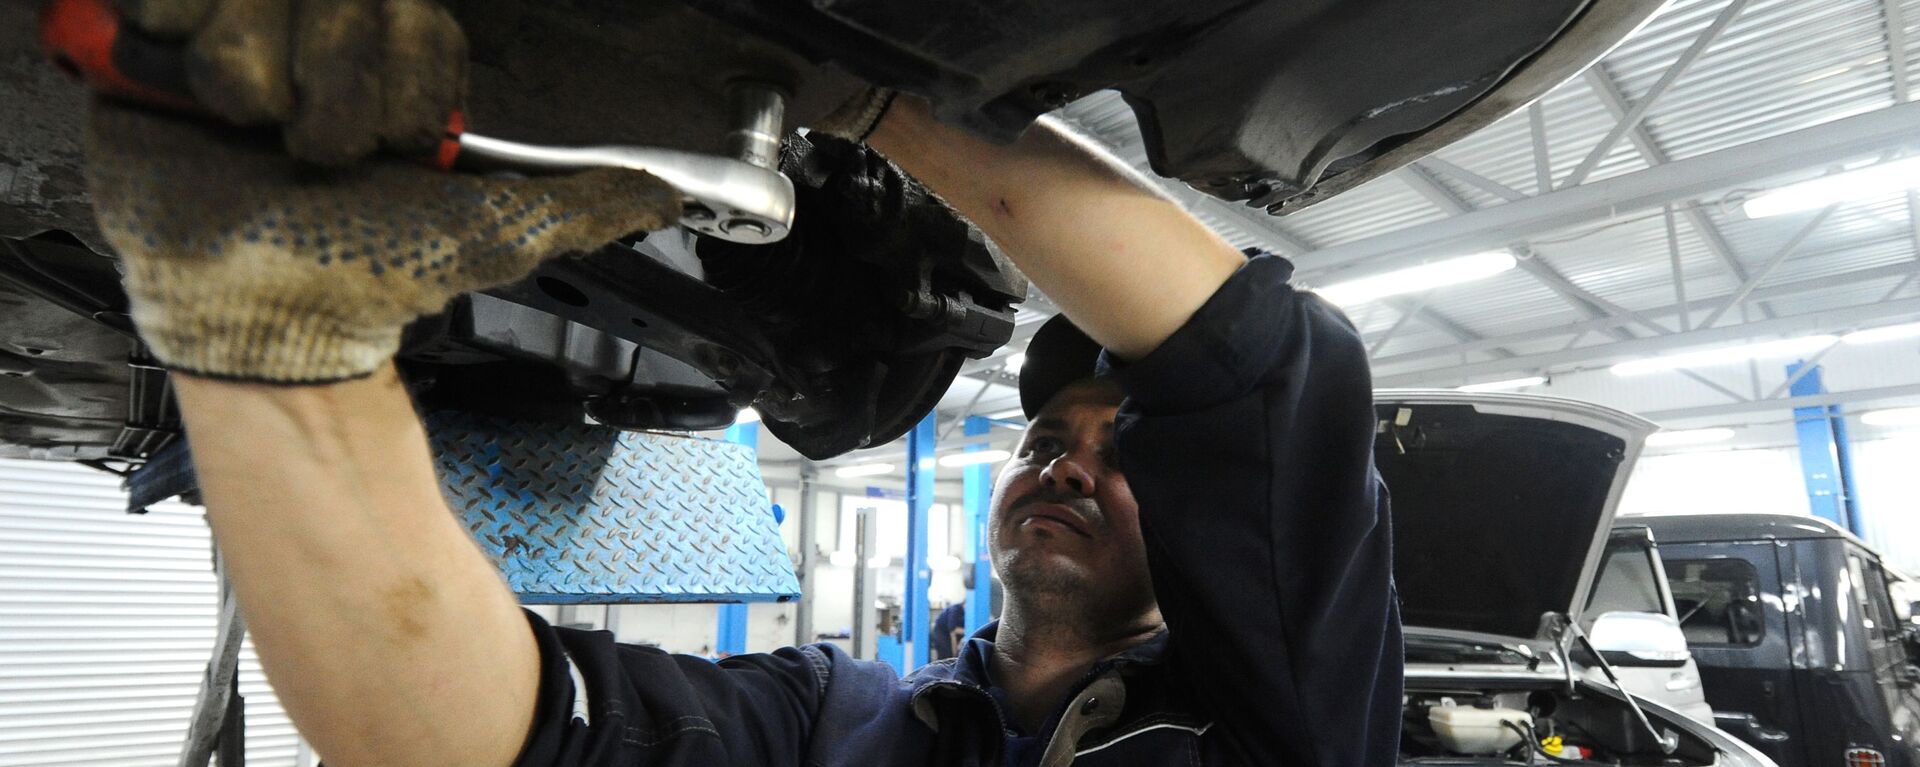 Сотрудник ремонтирует автомобиль - Sputnik Узбекистан, 1920, 09.12.2020